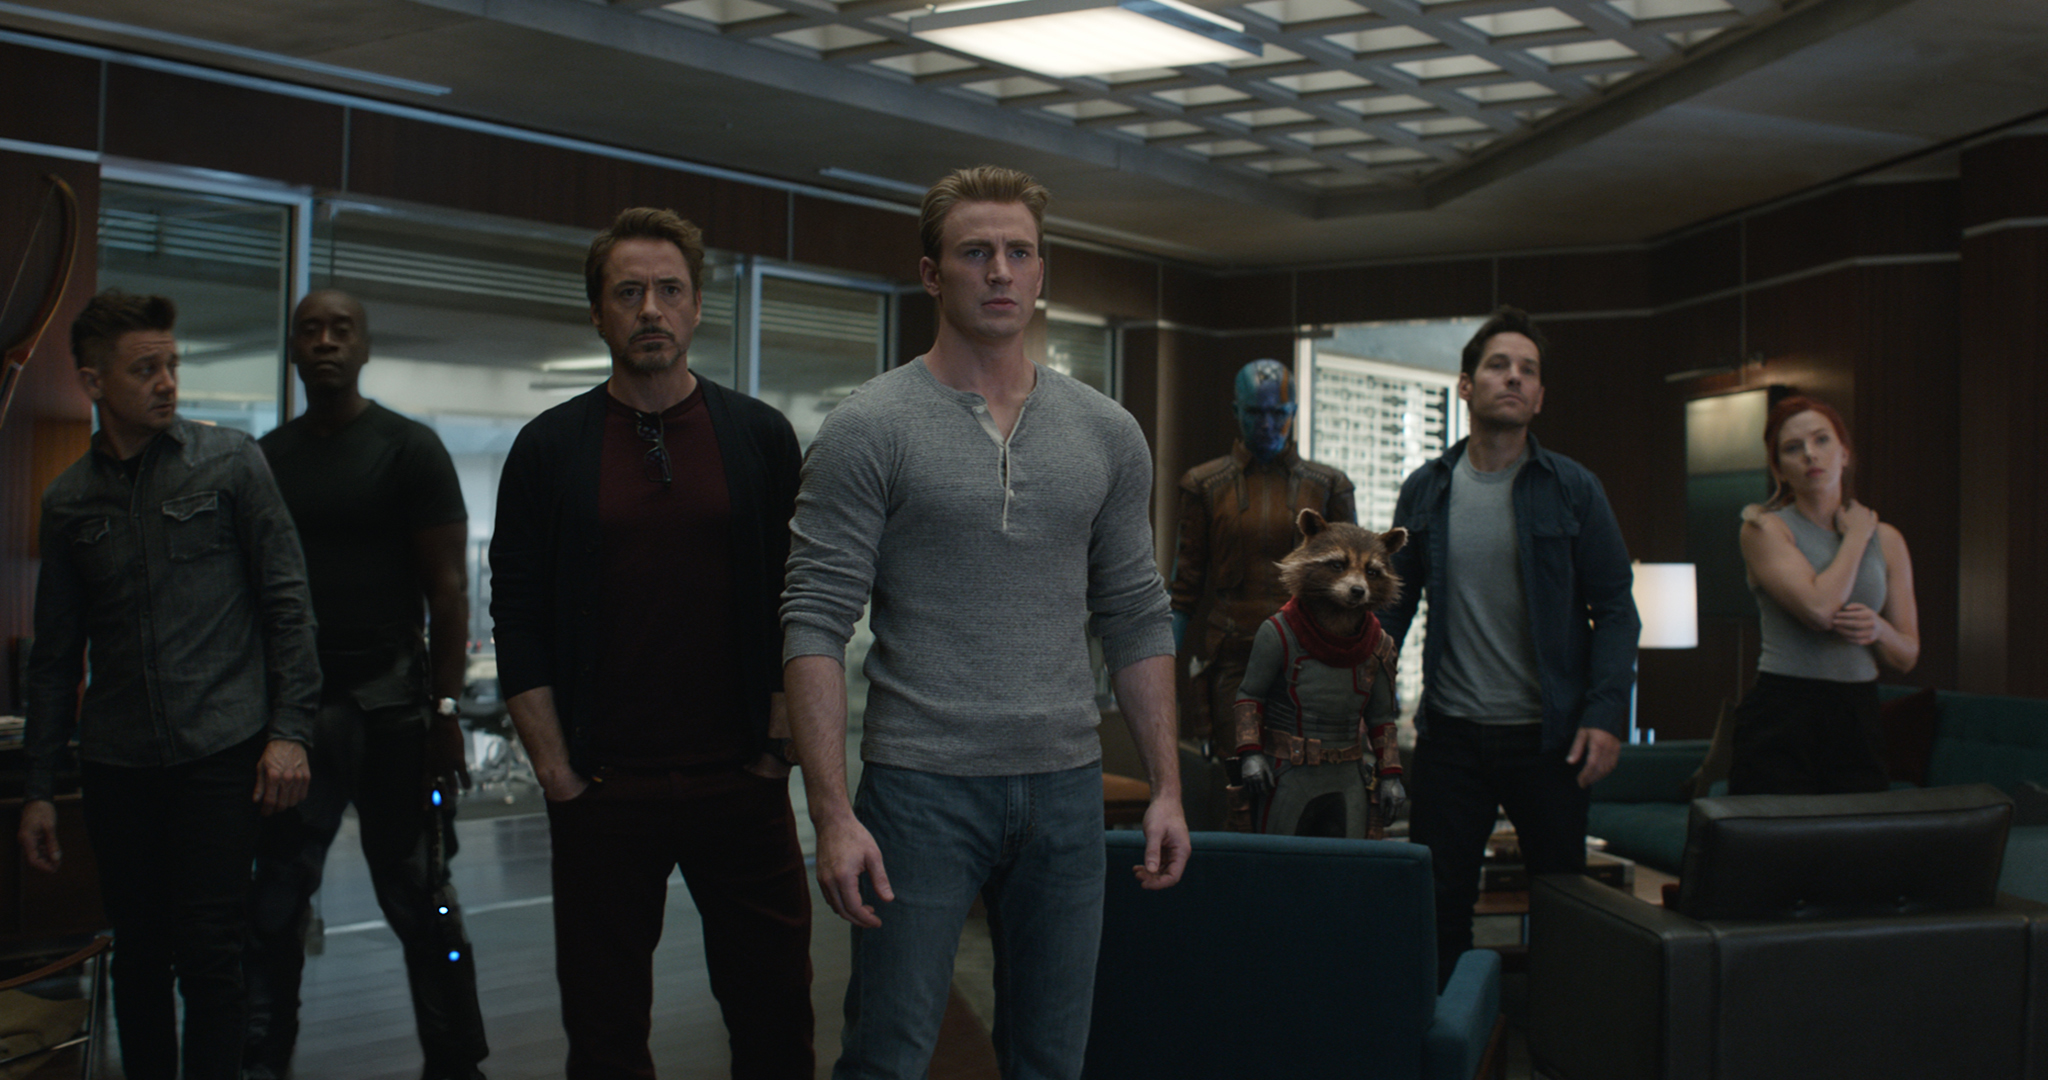 “Avengers: Endgame” closes a chapter for Marvel fans